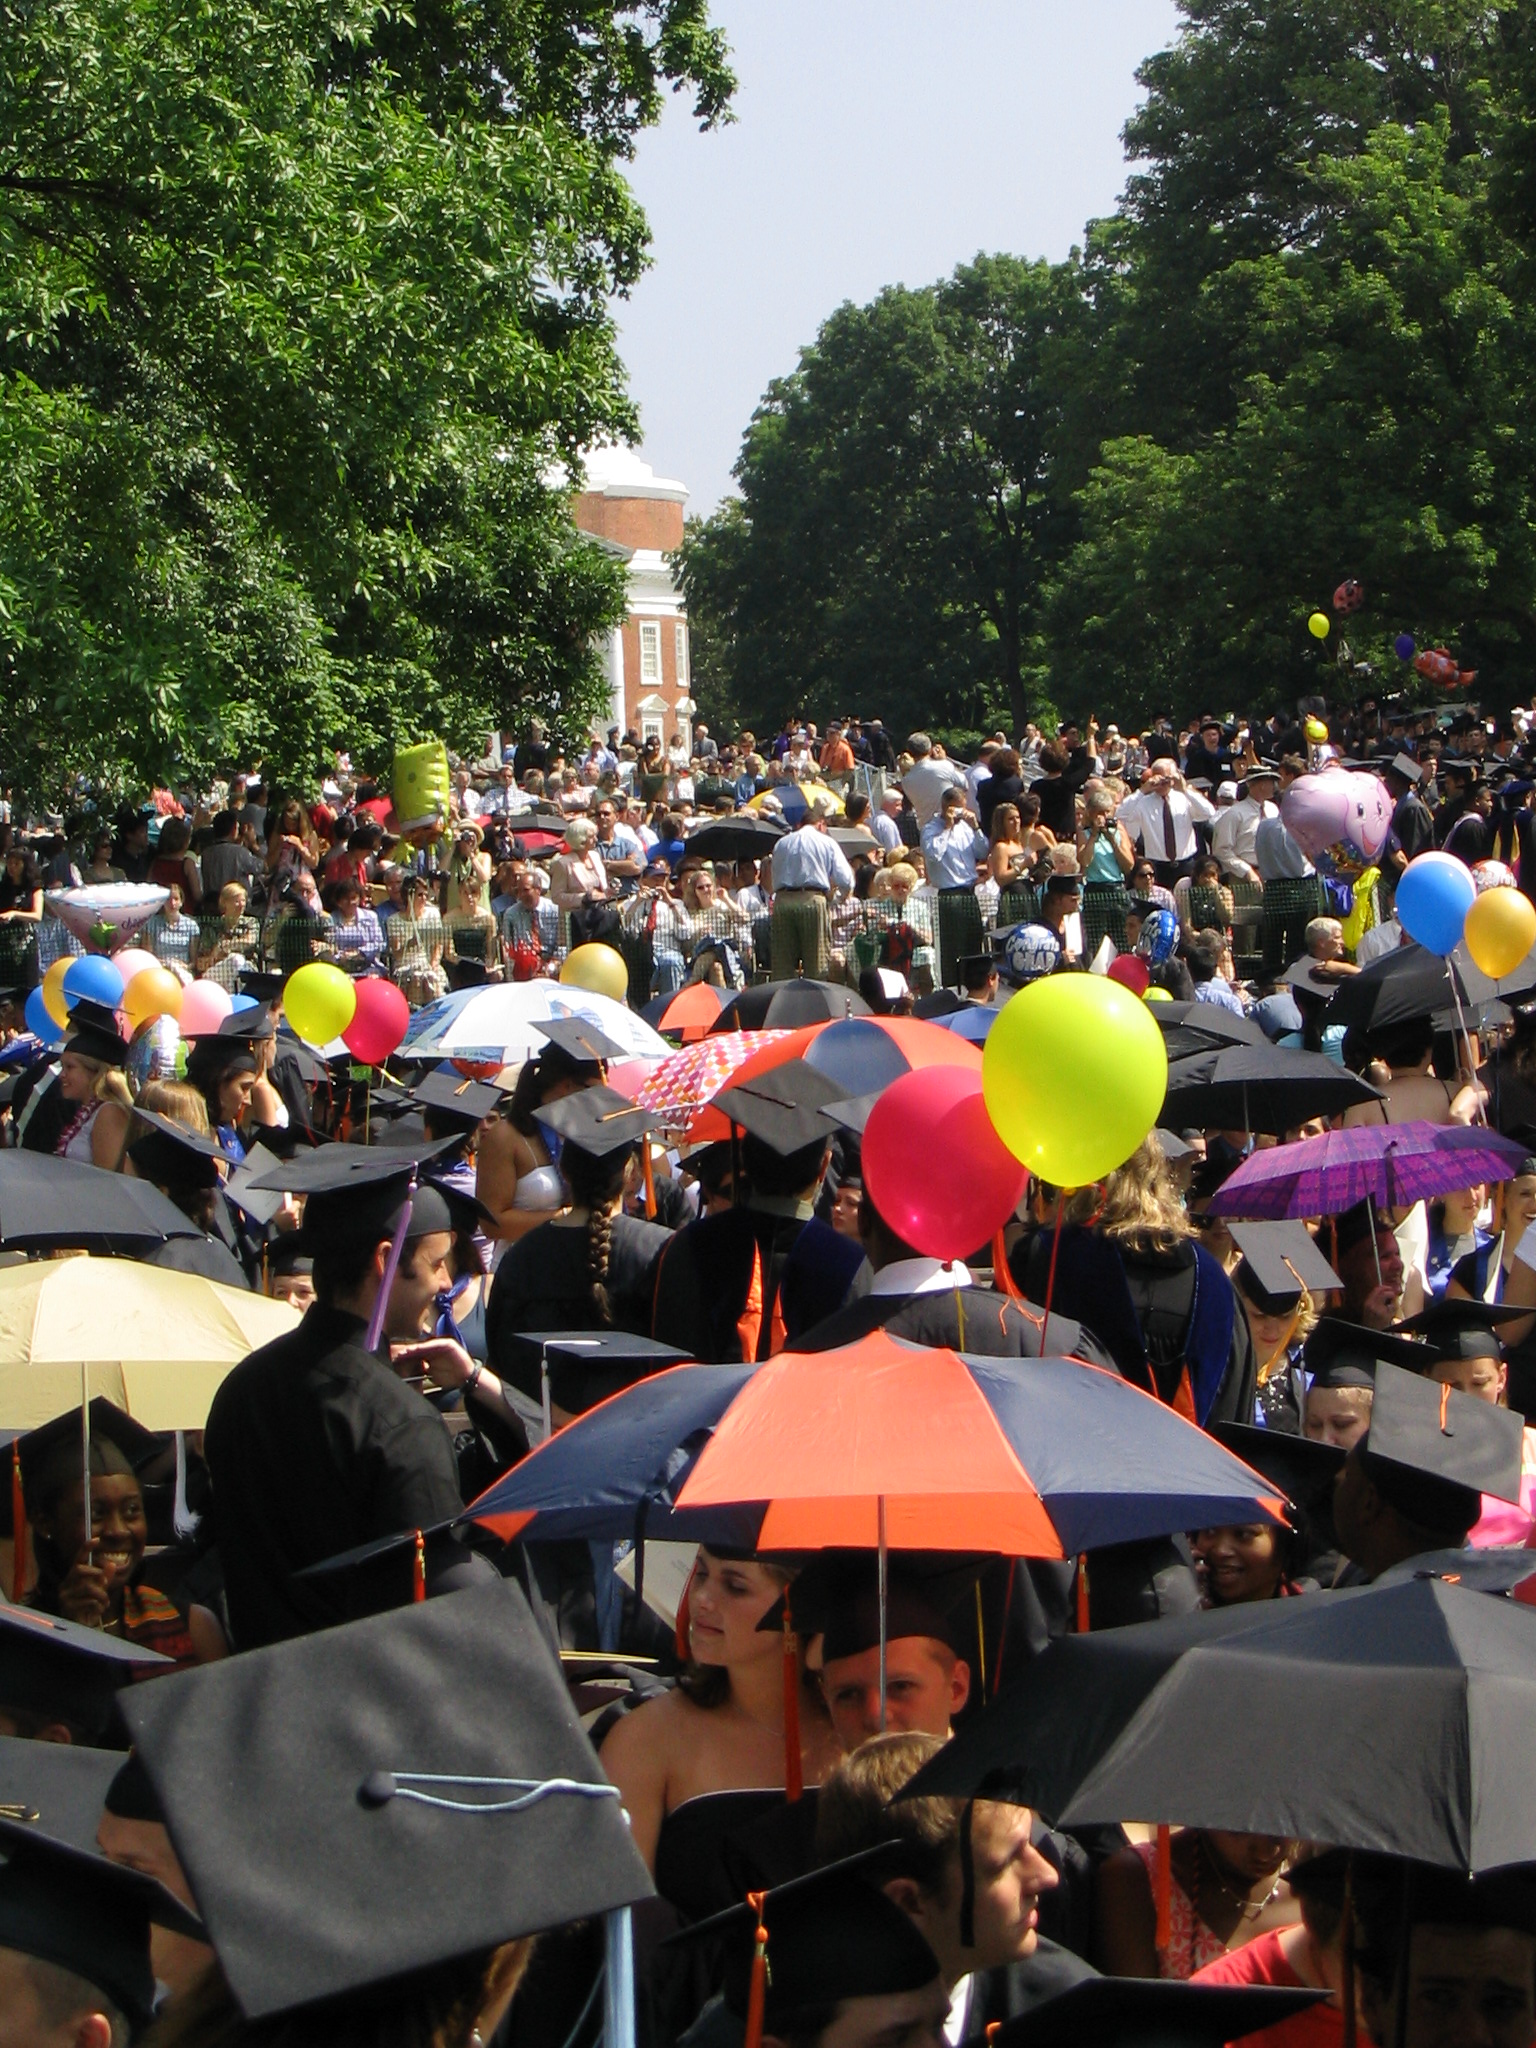 The Rotunda, Graduates, and Crowd